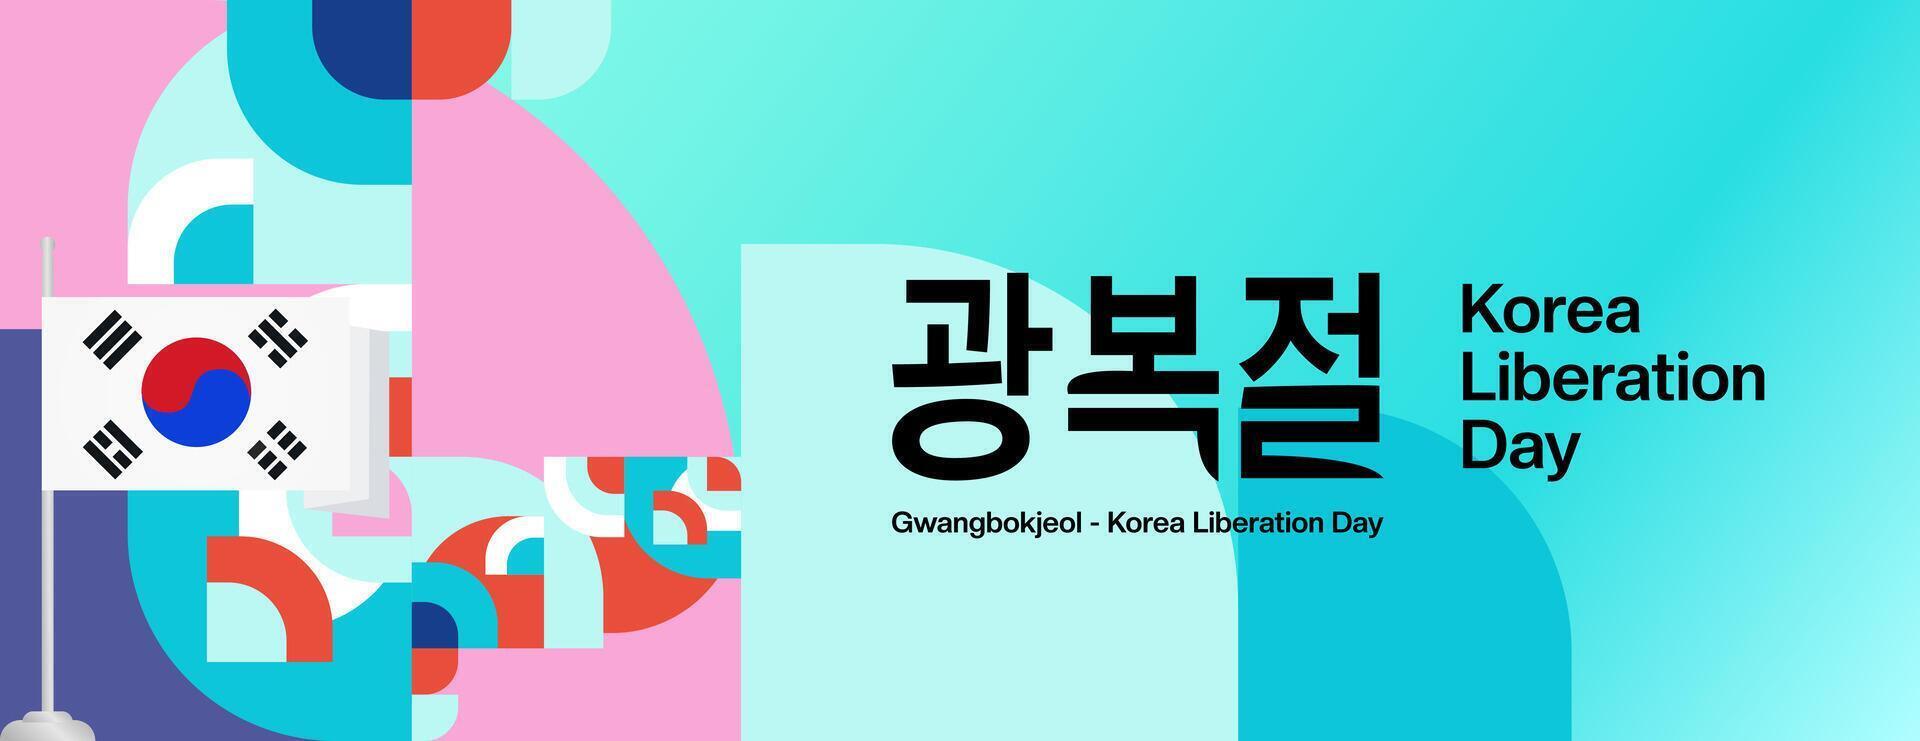 Corea nacional liberación día amplio bandera en vistoso moderno geométrico estilo. contento gwangbokjeol día es sur coreano independencia día. vector ilustración para nacional fiesta celebrar